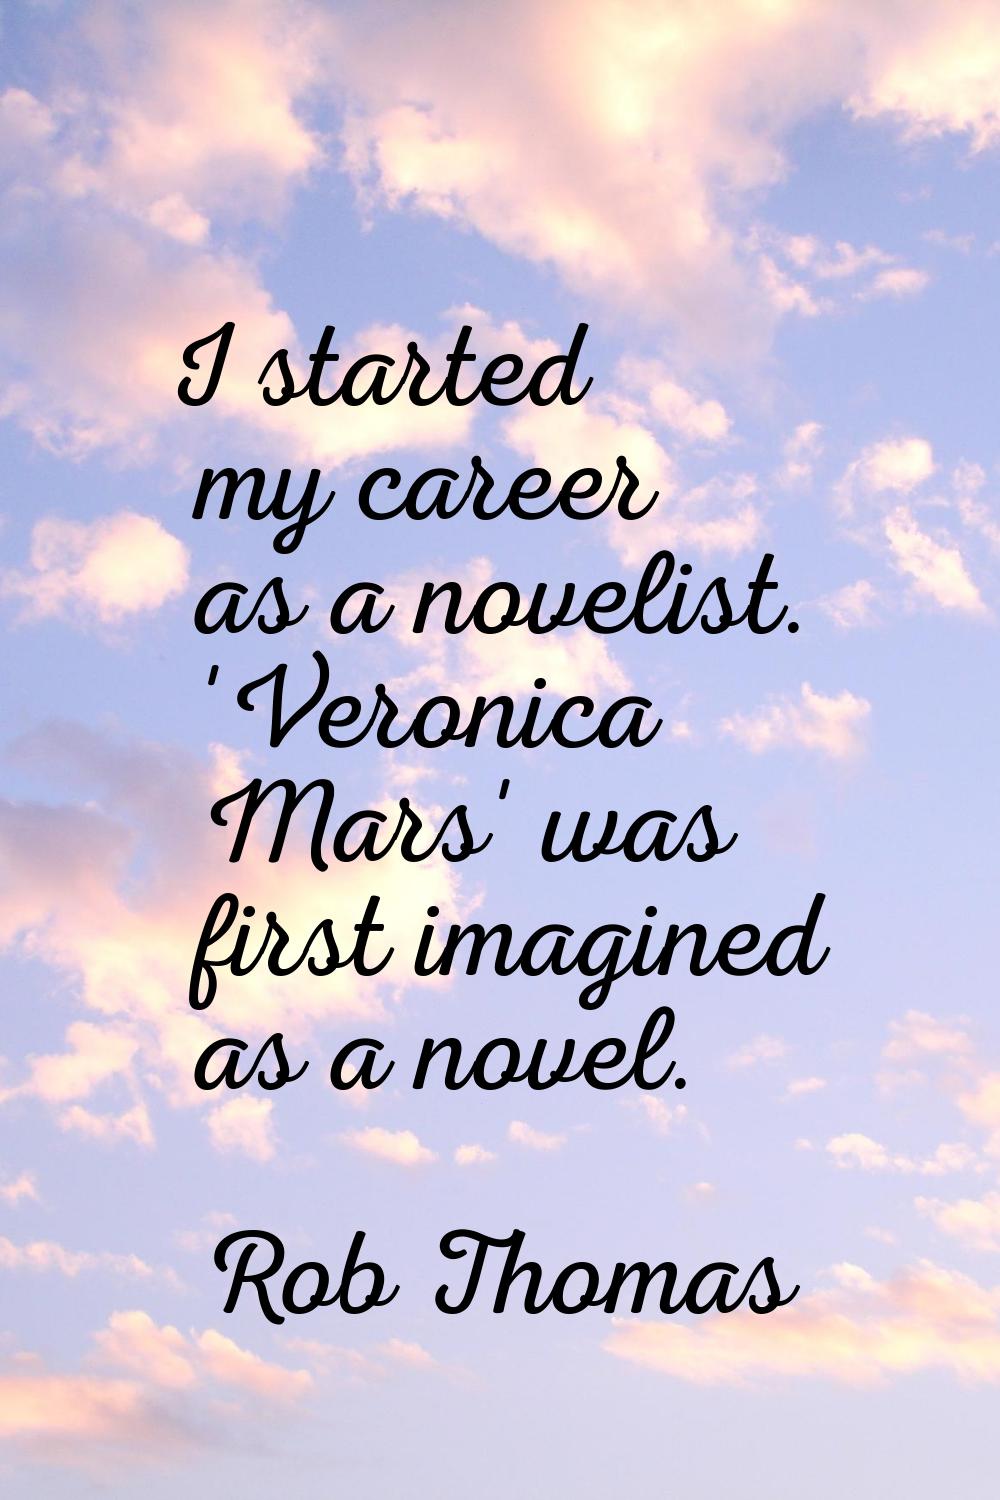 I started my career as a novelist. 'Veronica Mars' was first imagined as a novel.